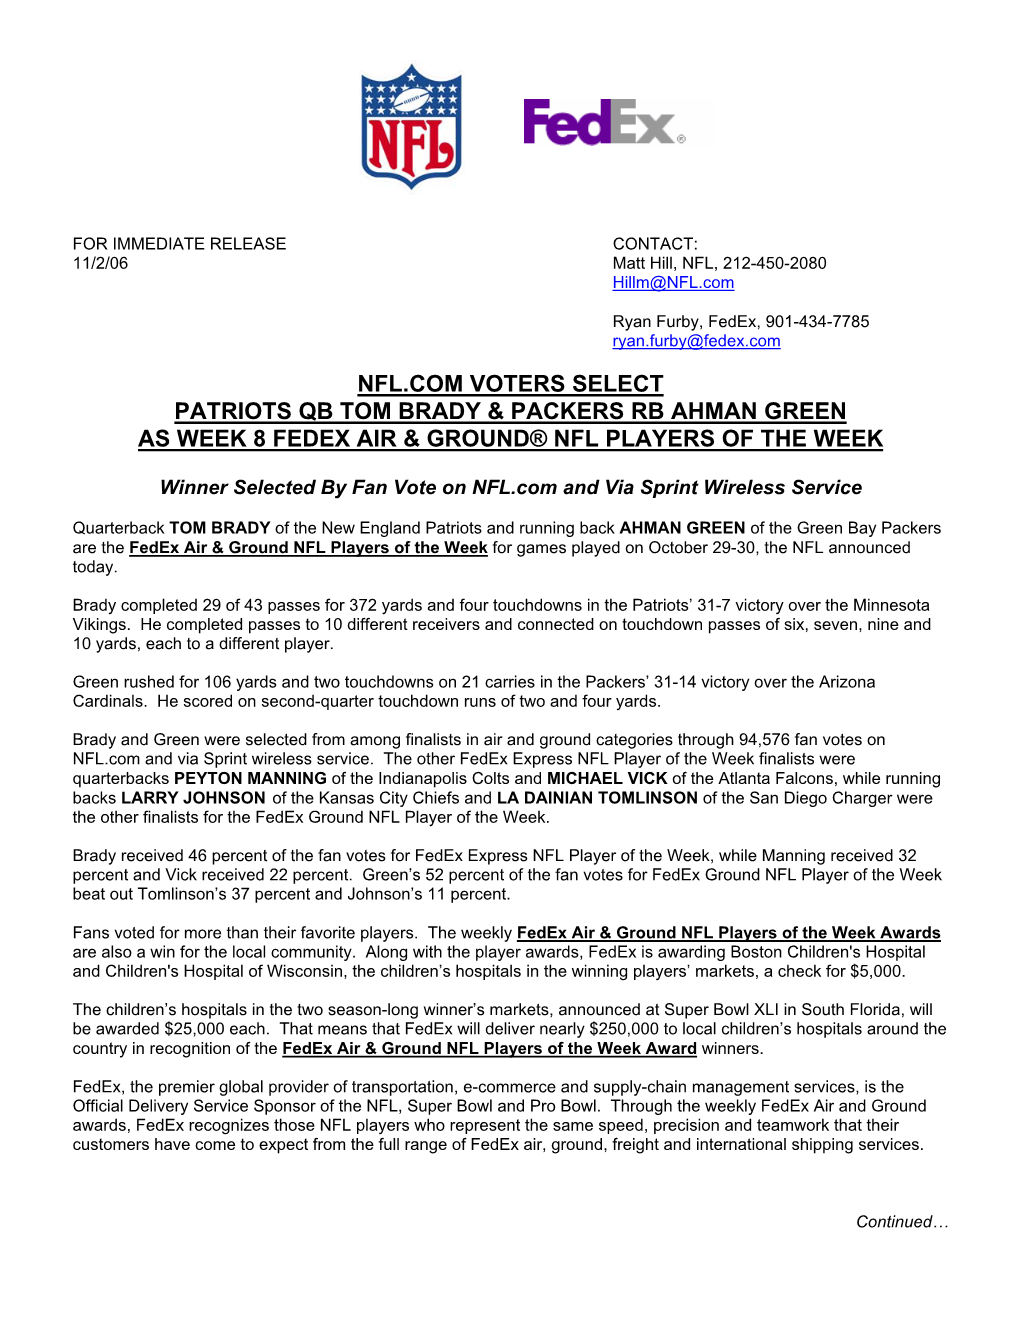 Nfl.Com Voters Select Patriots Qb Tom Brady & Packers Rb Ahman Green As Week 8 Fedex Air & Ground® Nfl Players of the Week